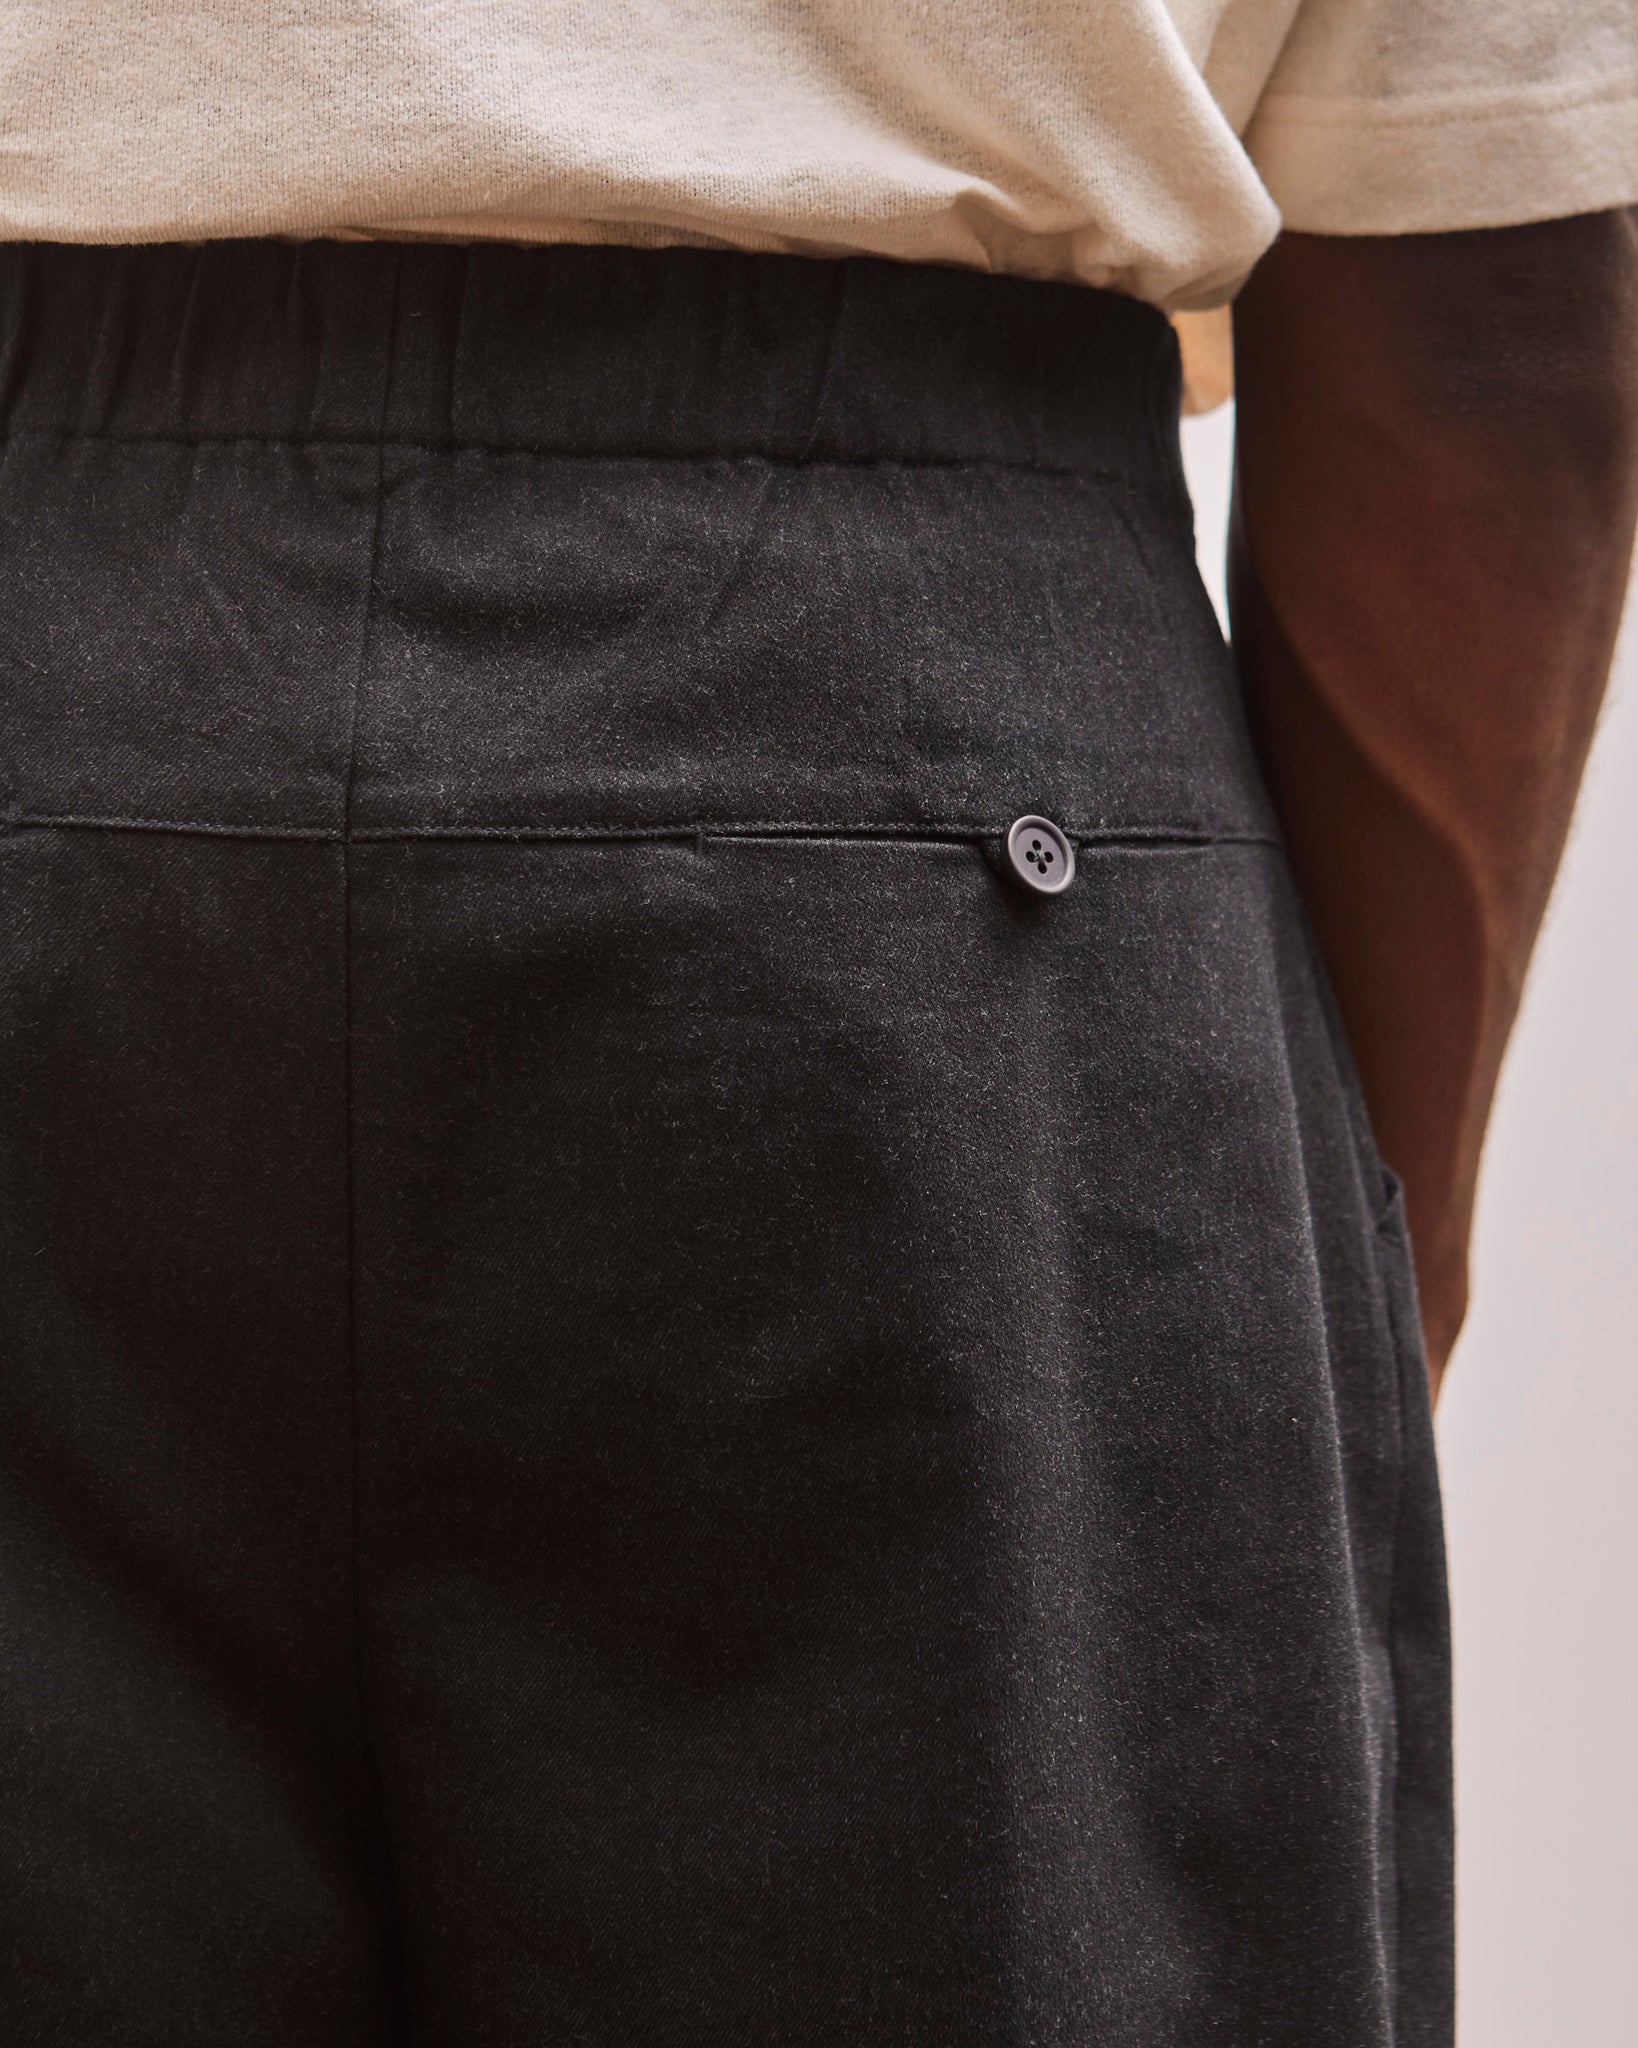 7115 Signature Pleated Trouser, Navy Black, back pocket detail